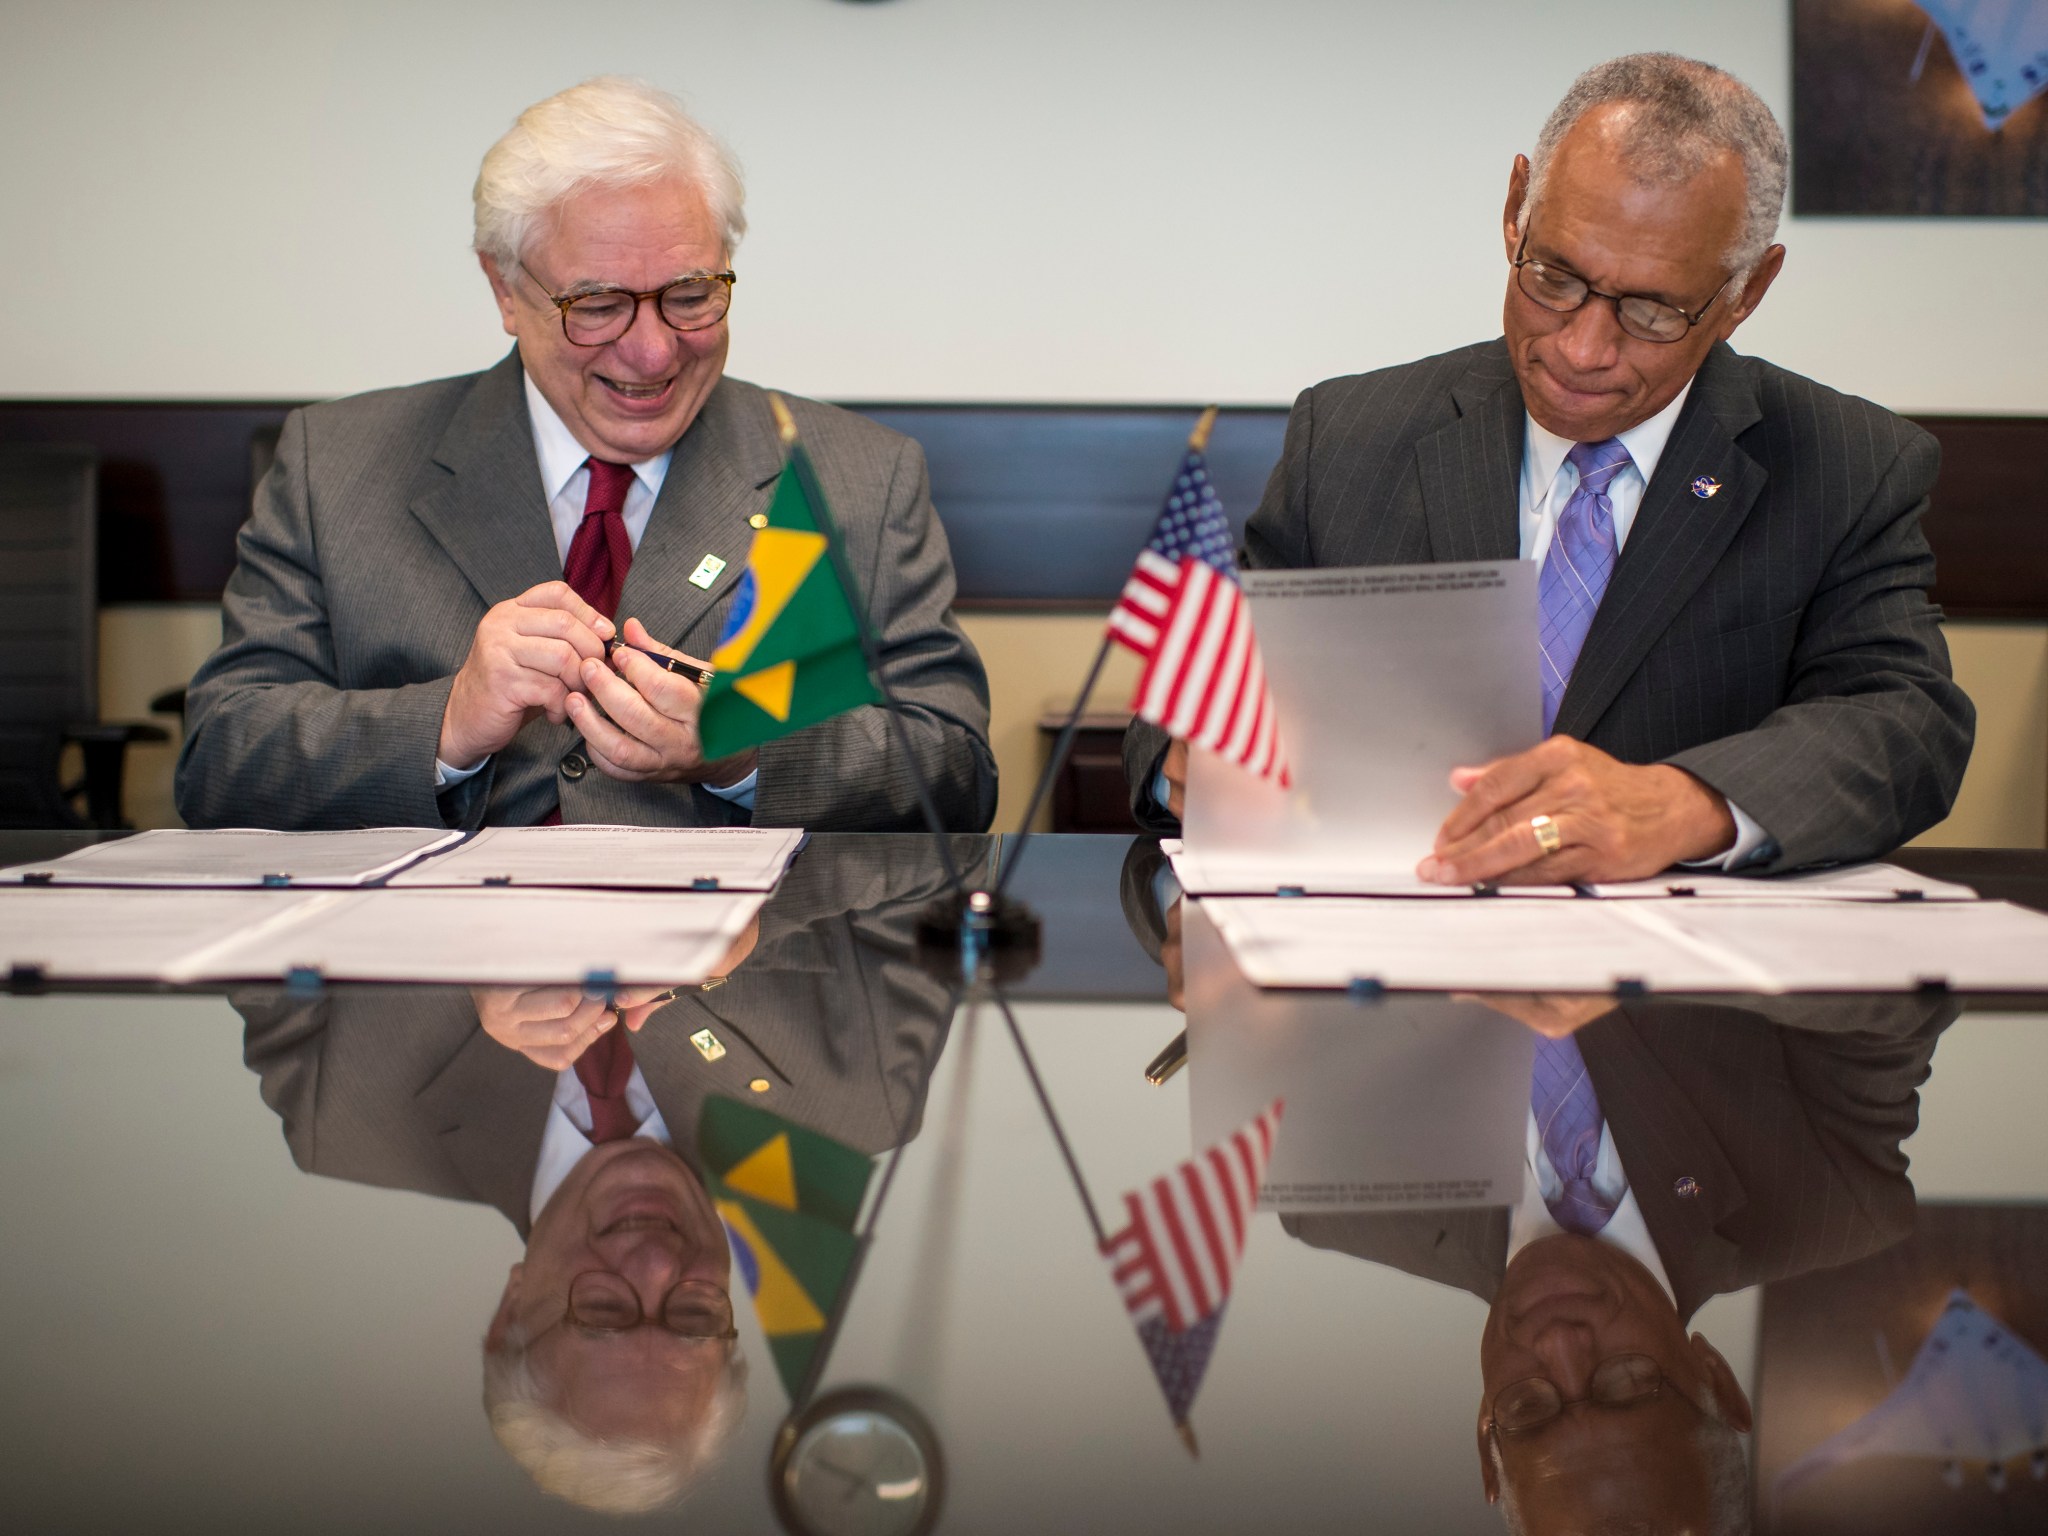 Administrator Bolden and Brazilian Space Agency President José Raimundo Braga Coelho sign an agreement.